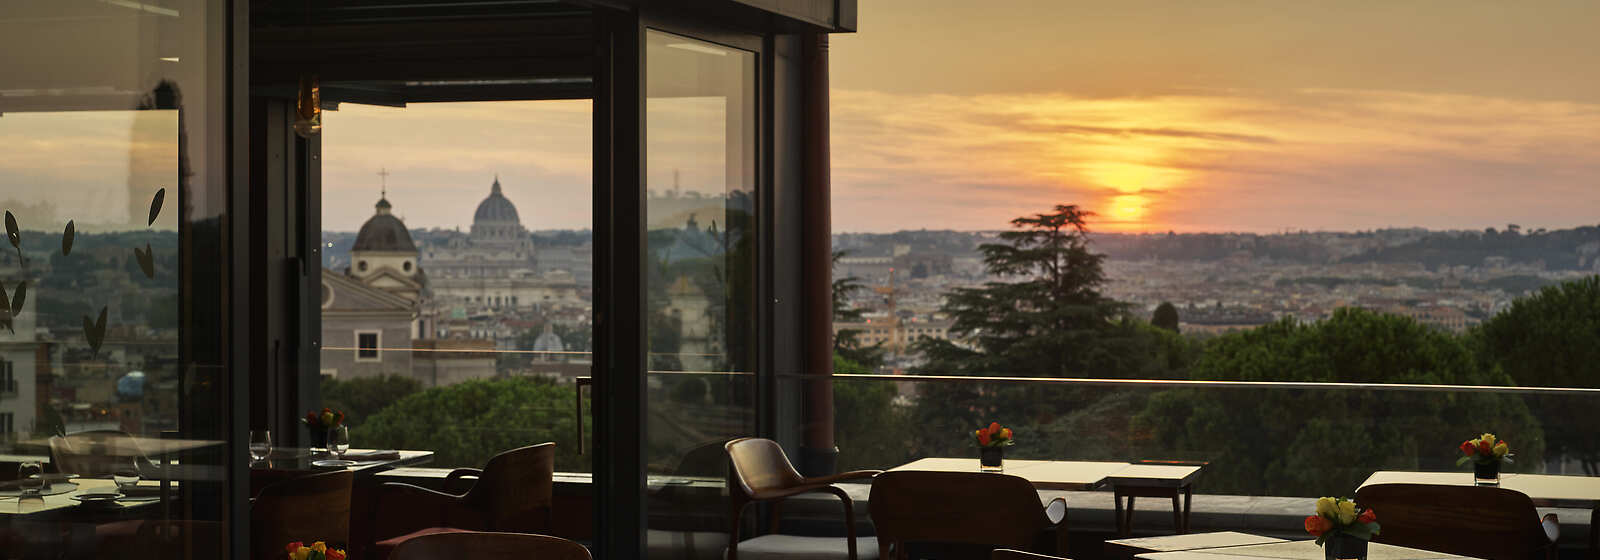 Hotel Eden's Il Giardino Ristorante Open air terrace during sunset by Dorchester Collection